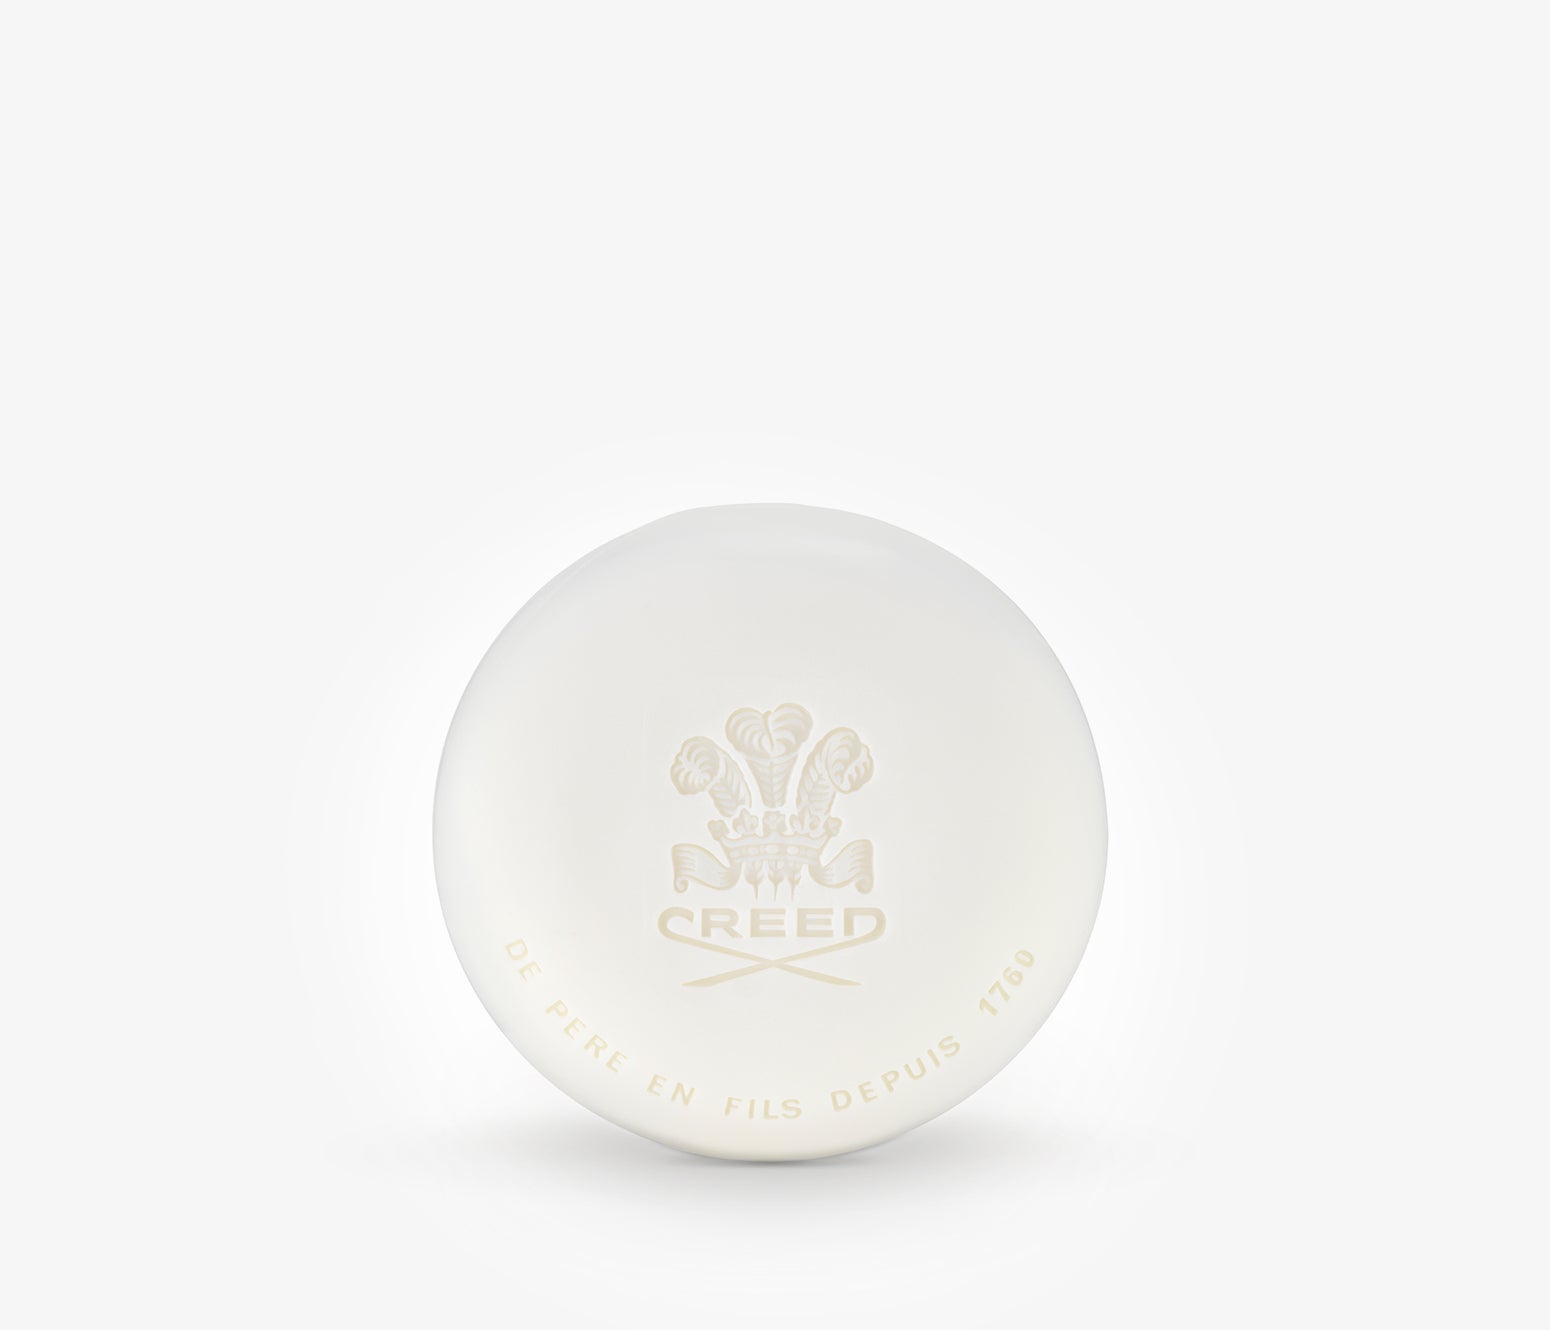 Creed - Aventus Soap - 150g - PHX1765 - Product Image - Fragrance - Les Senteurs